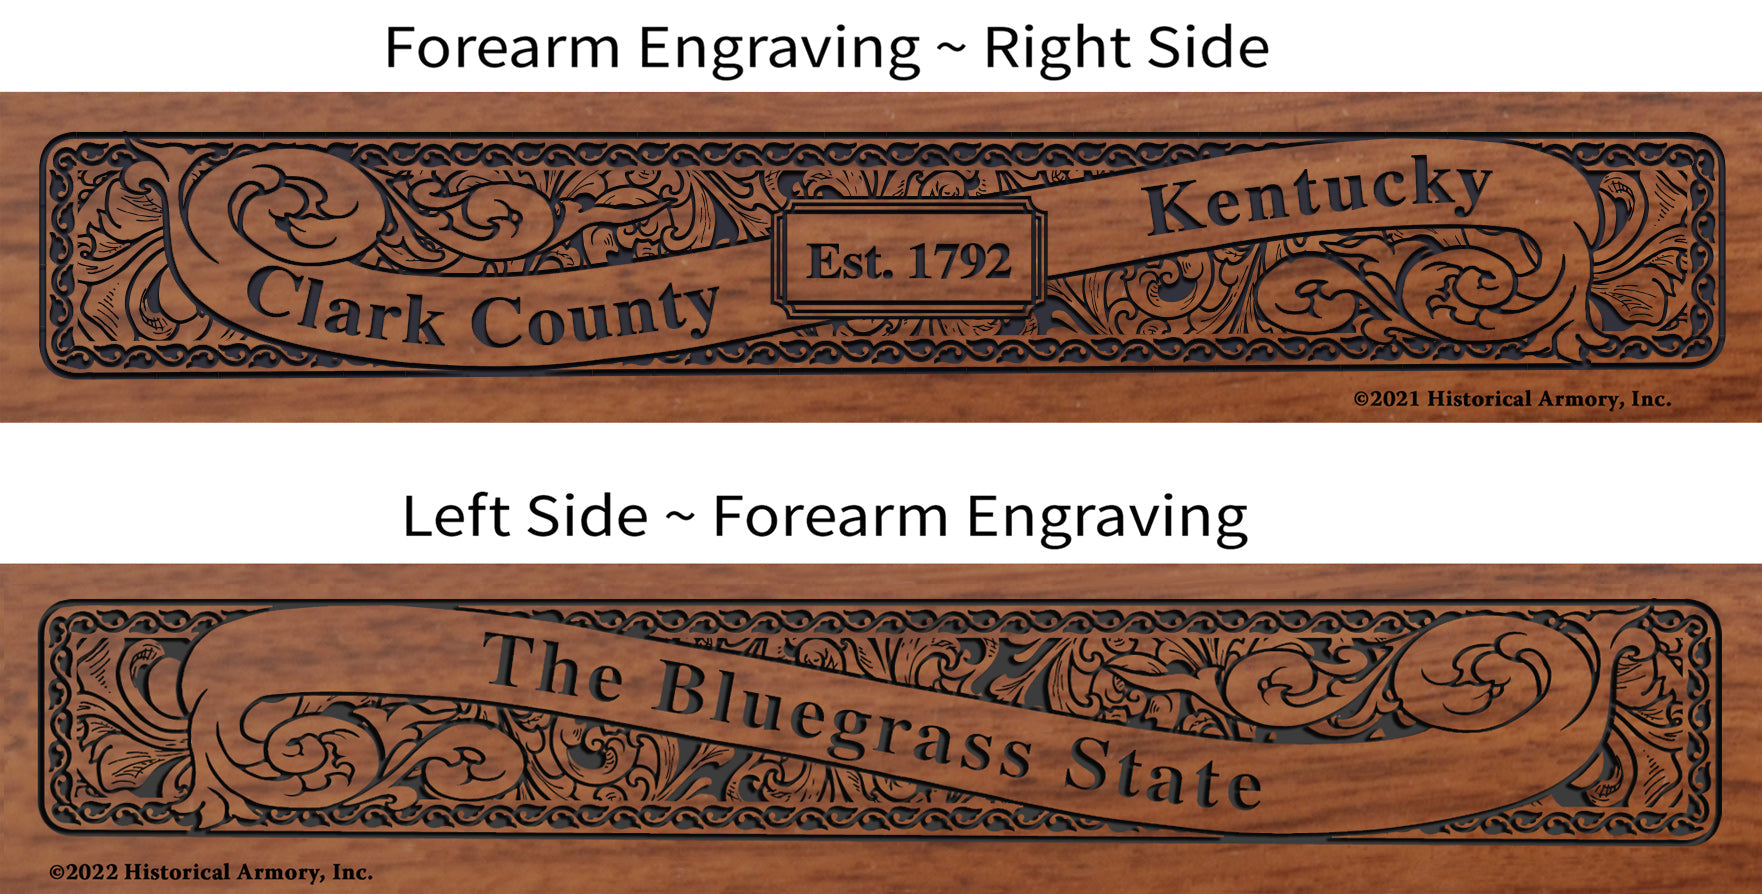 Clark County Kentucky Engraved Rifle Forearm